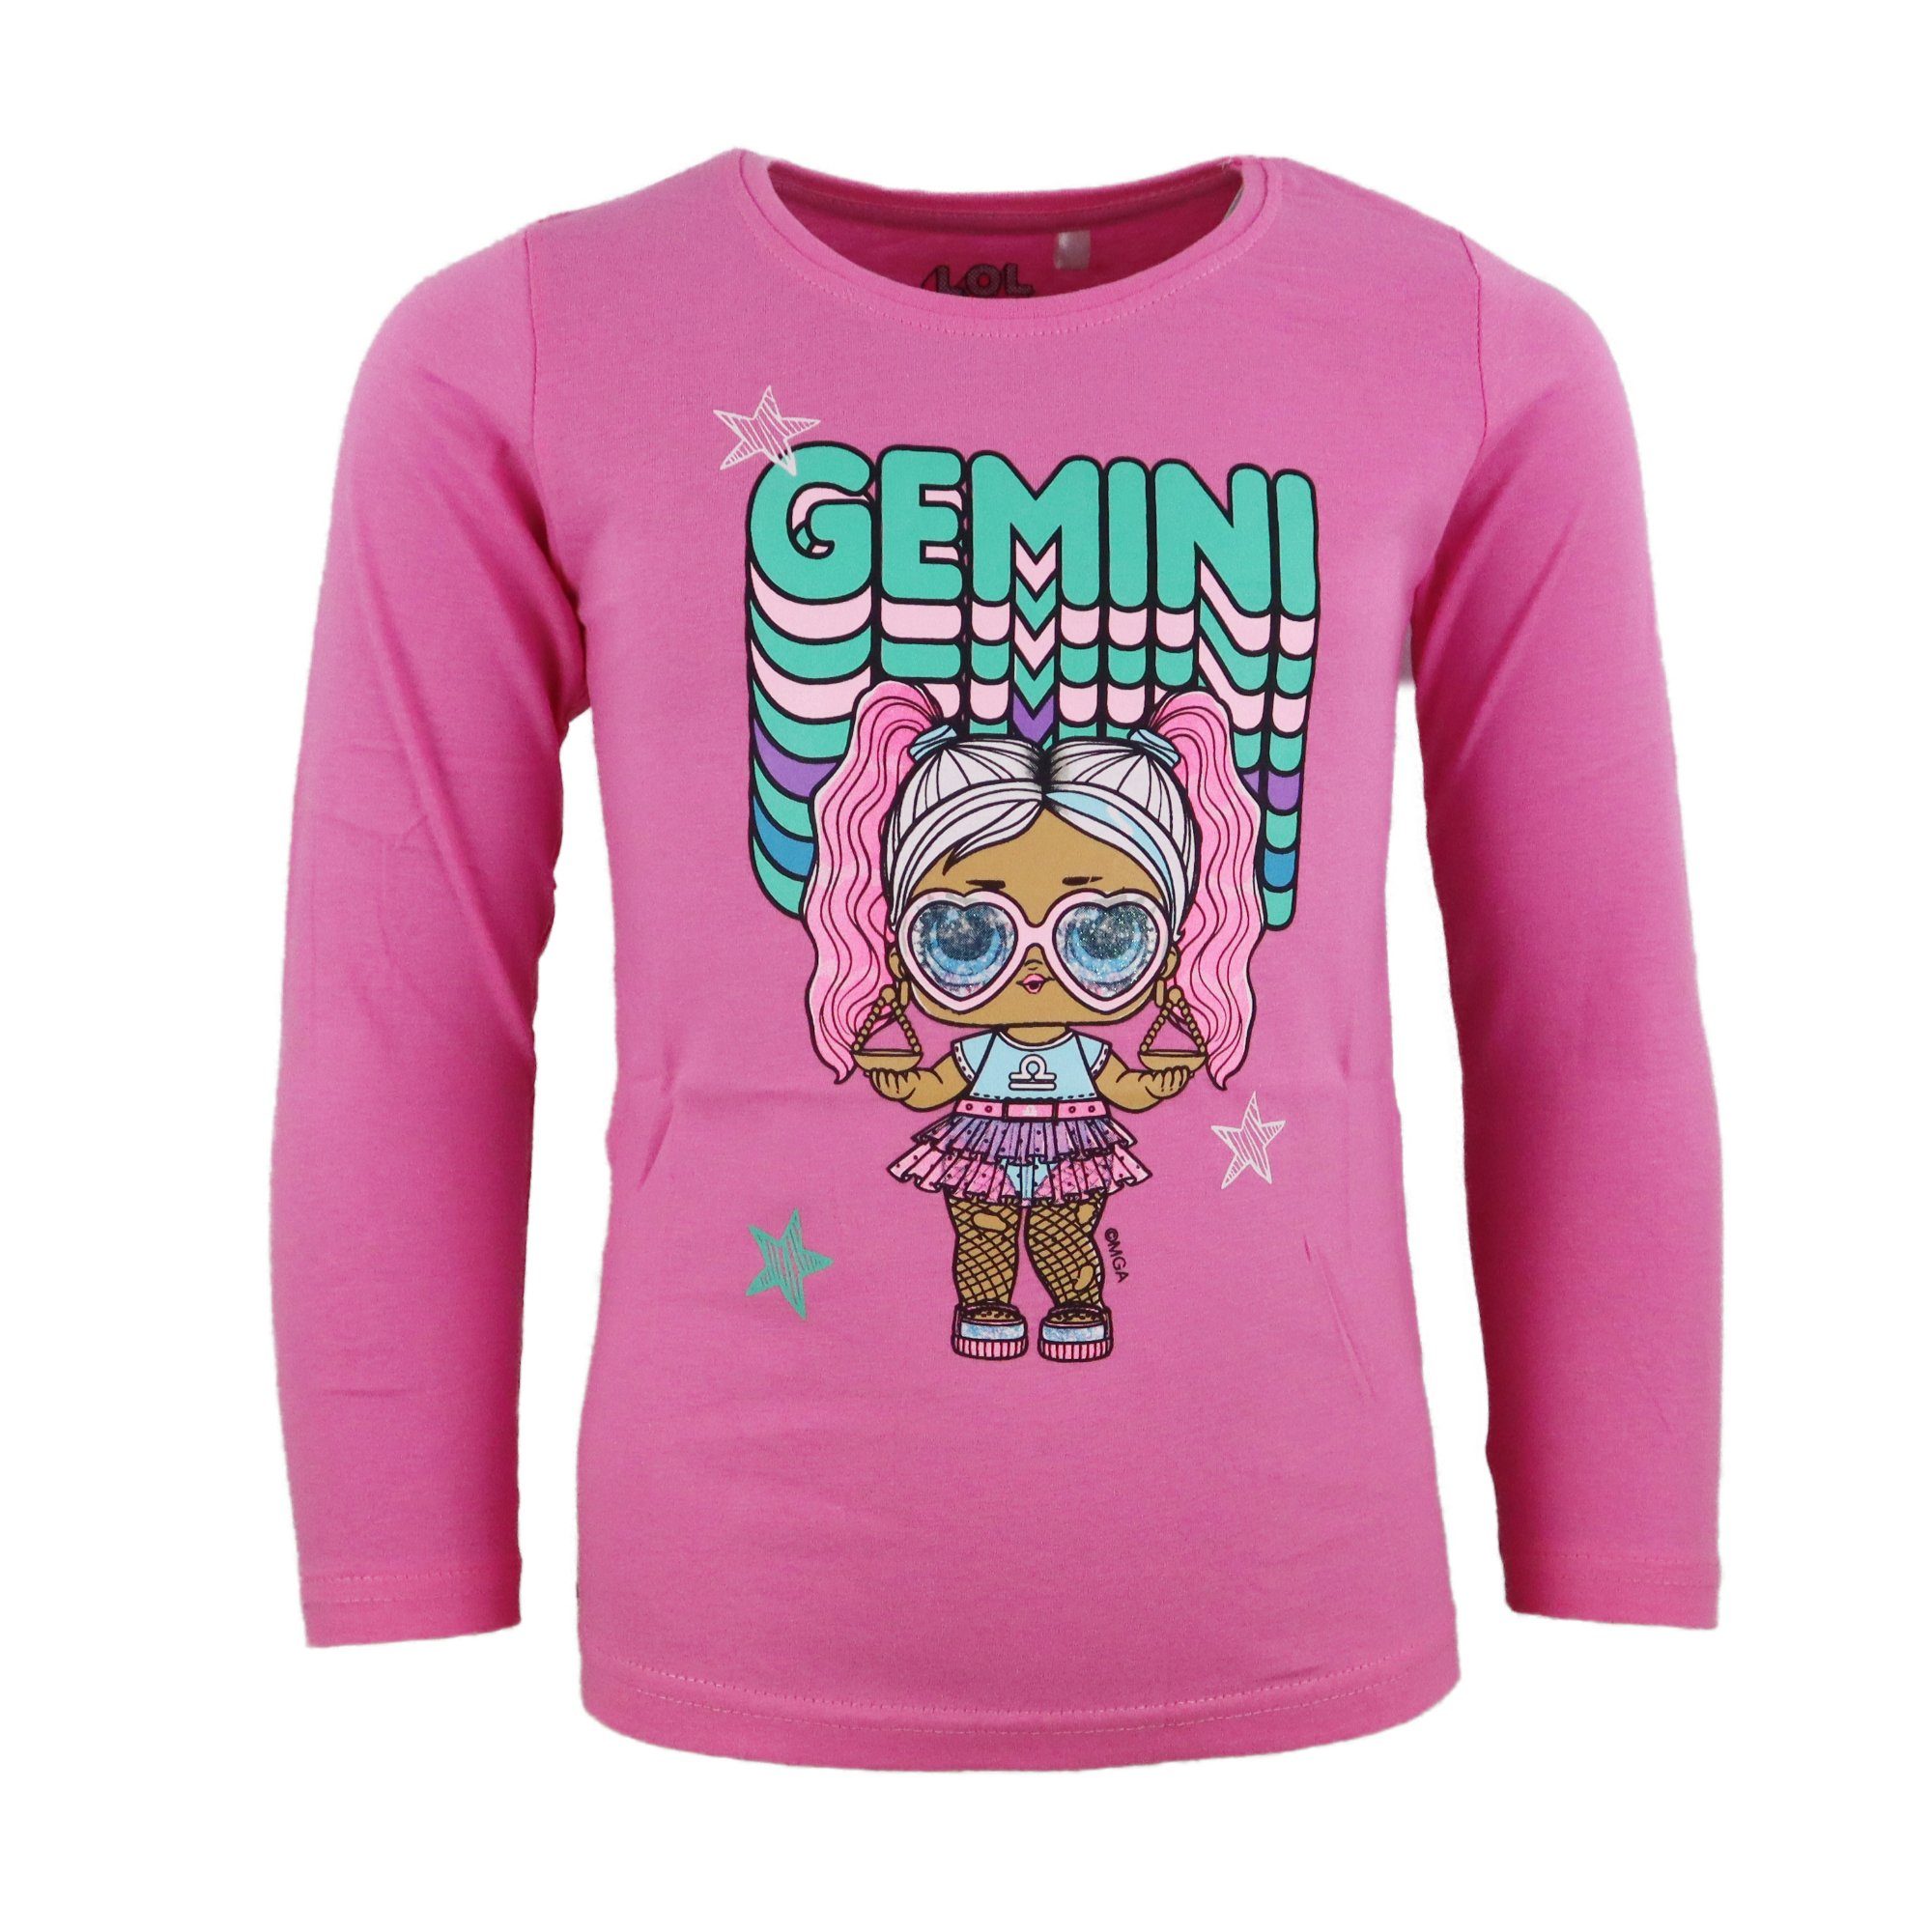 L.O.L. SURPRISE! Langarmshirt LOL Surprise Gemini Kinder Mädchen Shirt Gr. 98 bis 128, 100% Baumwolle Rosa